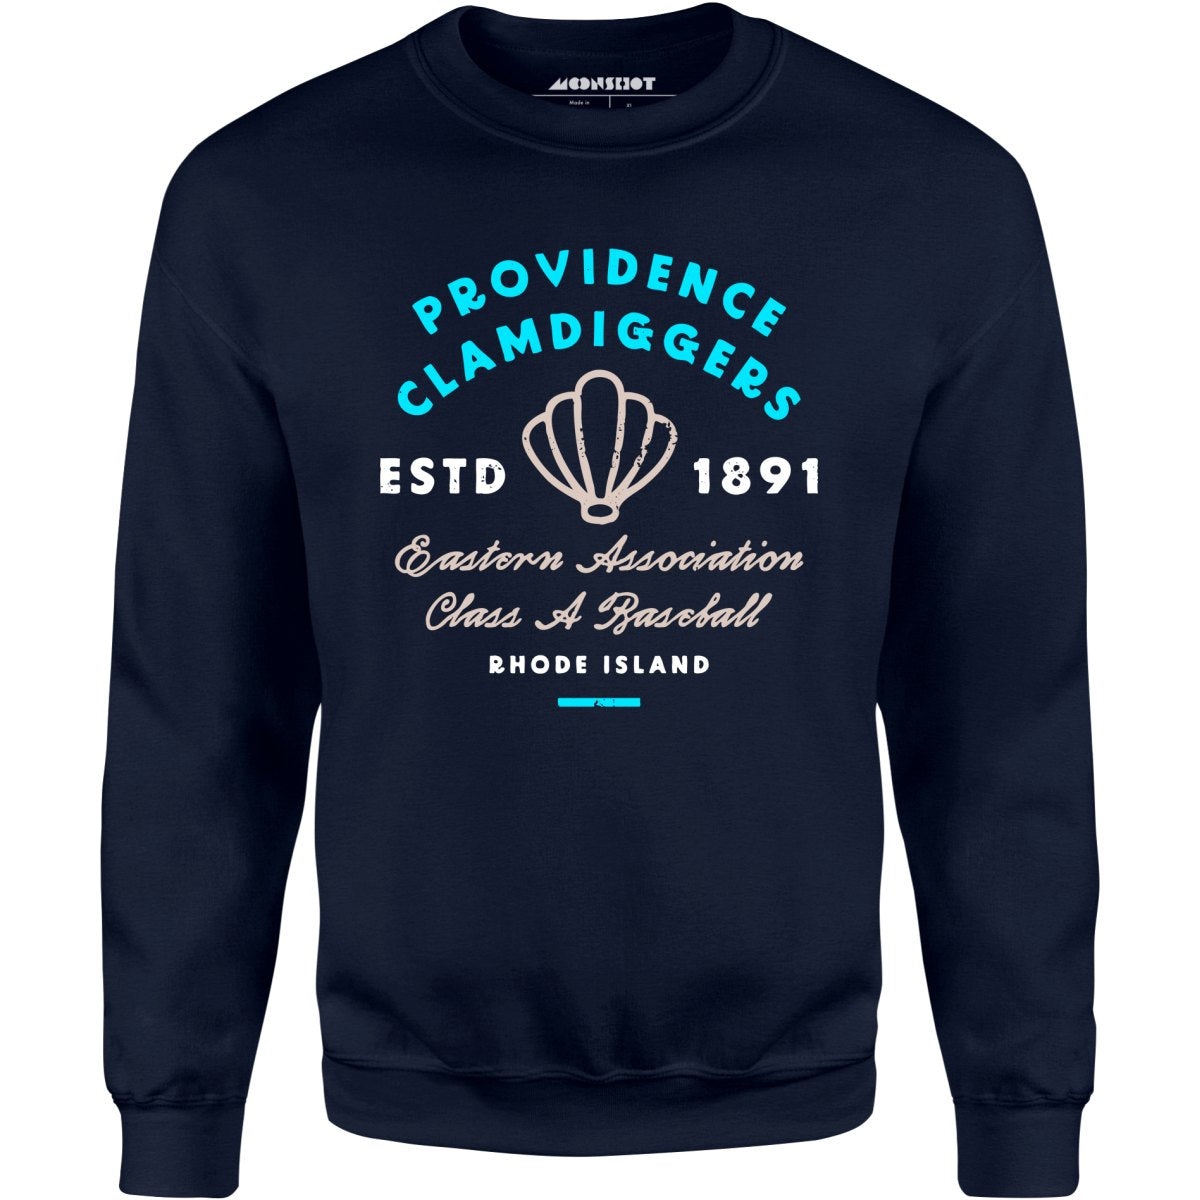 Providence Clamdiggers - Rhode Island - Vintage Defunct Baseball Teams - Unisex Sweatshirt